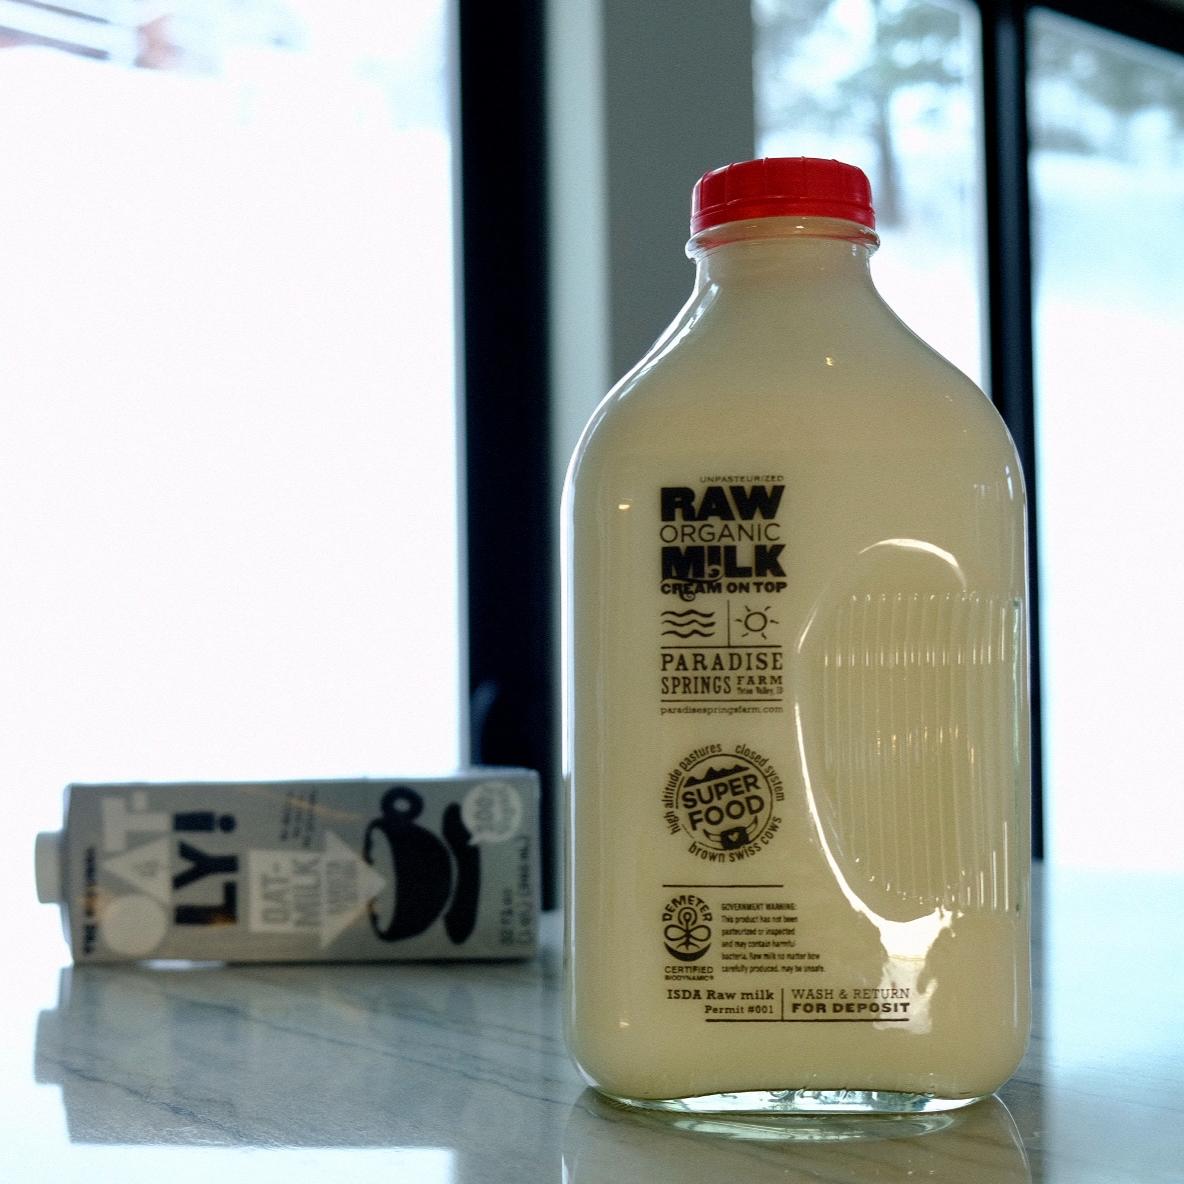 Oat milk fad over, Brooklynites buying cows